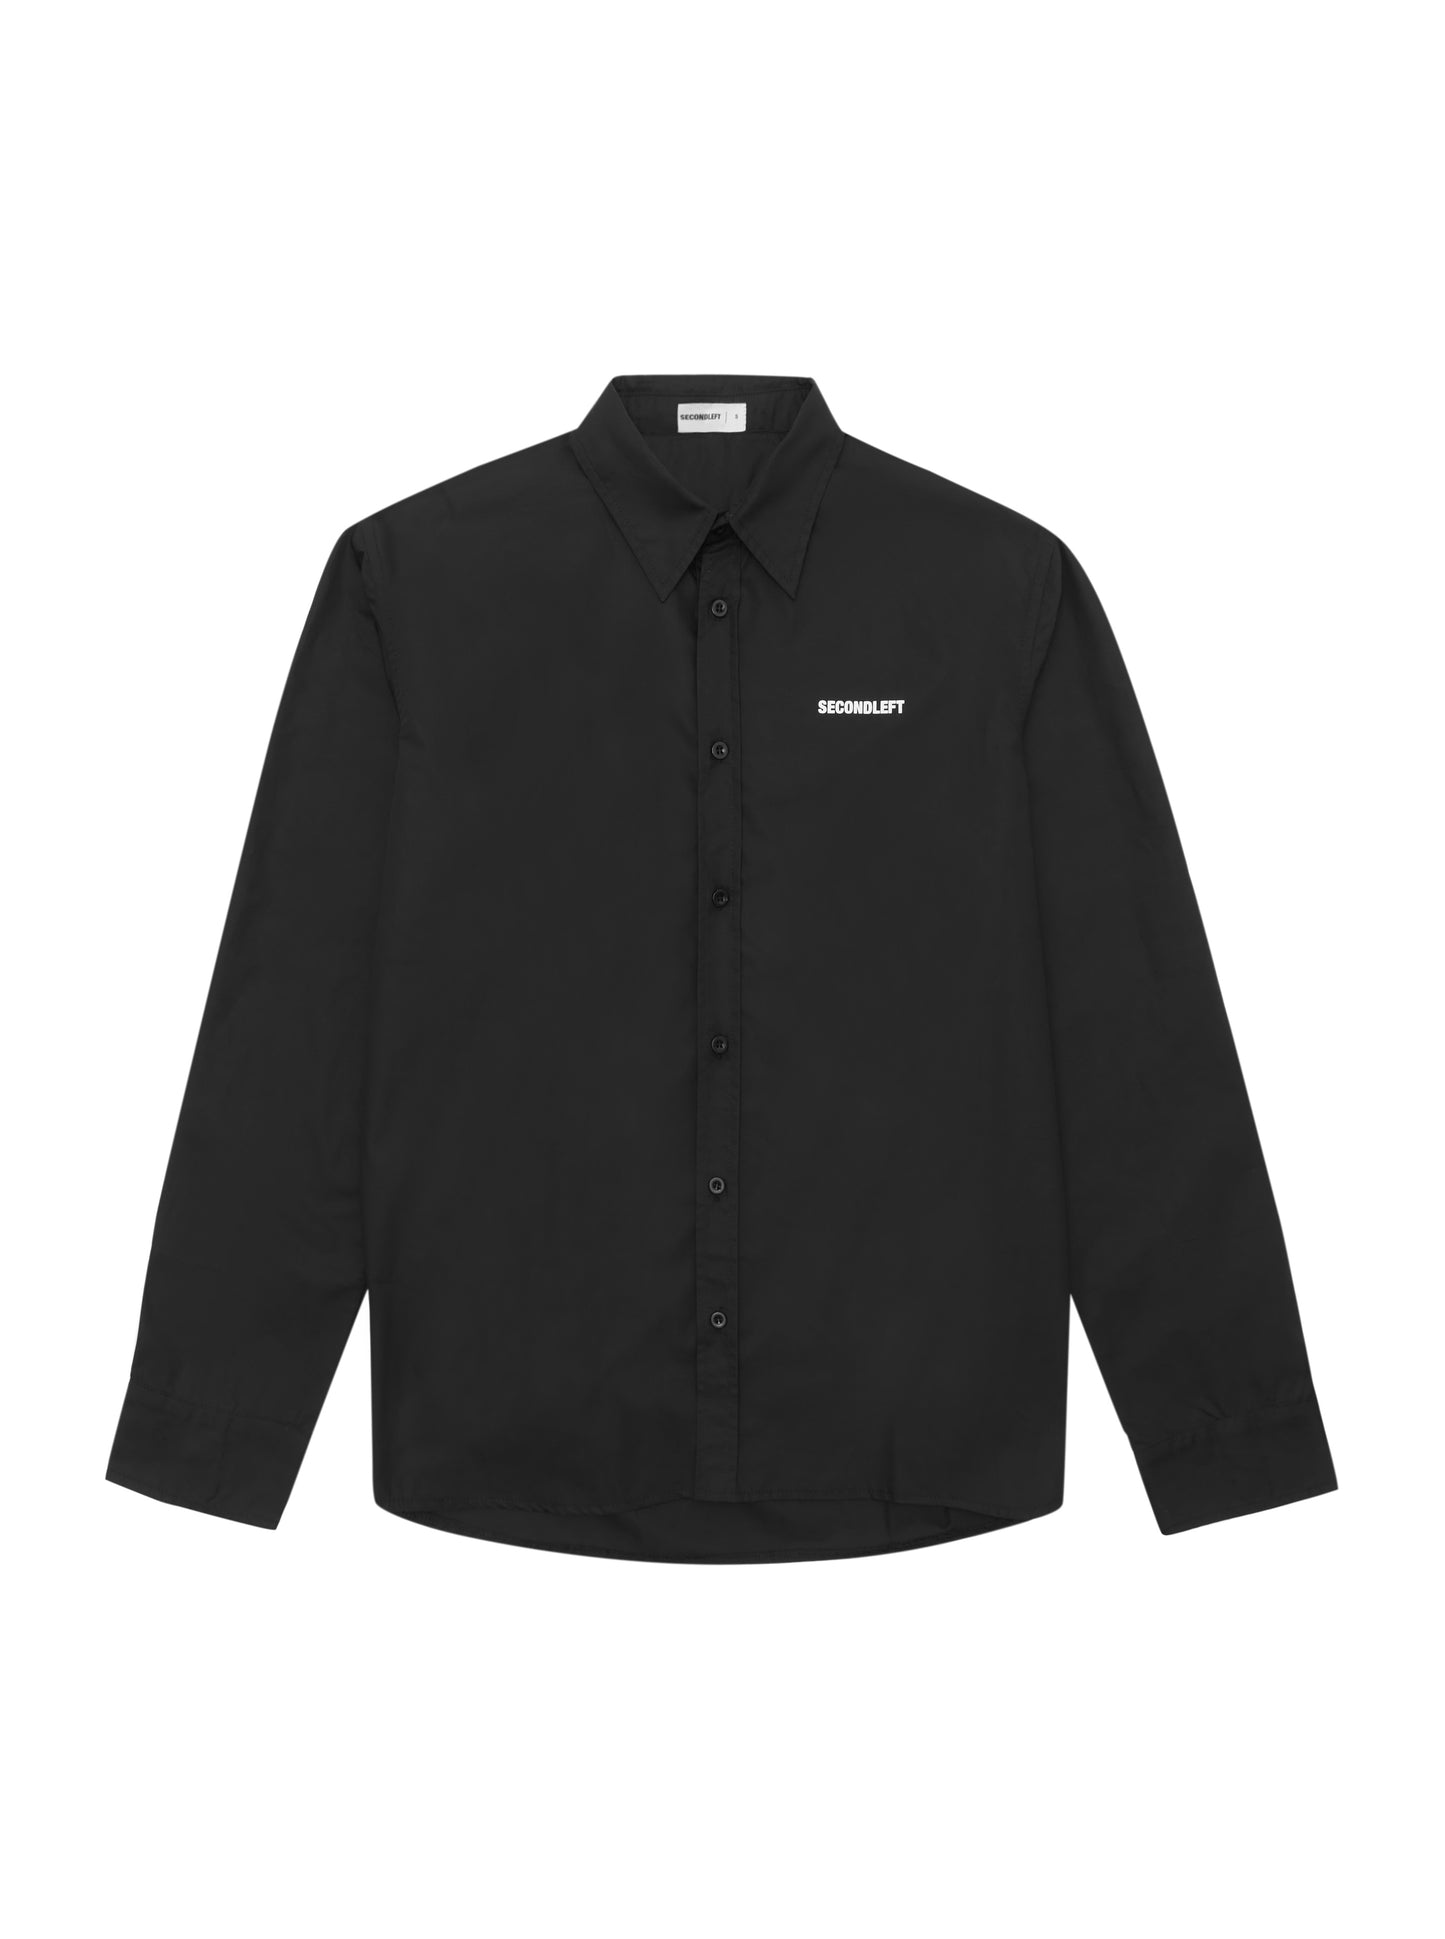 S1 Button Up - Black